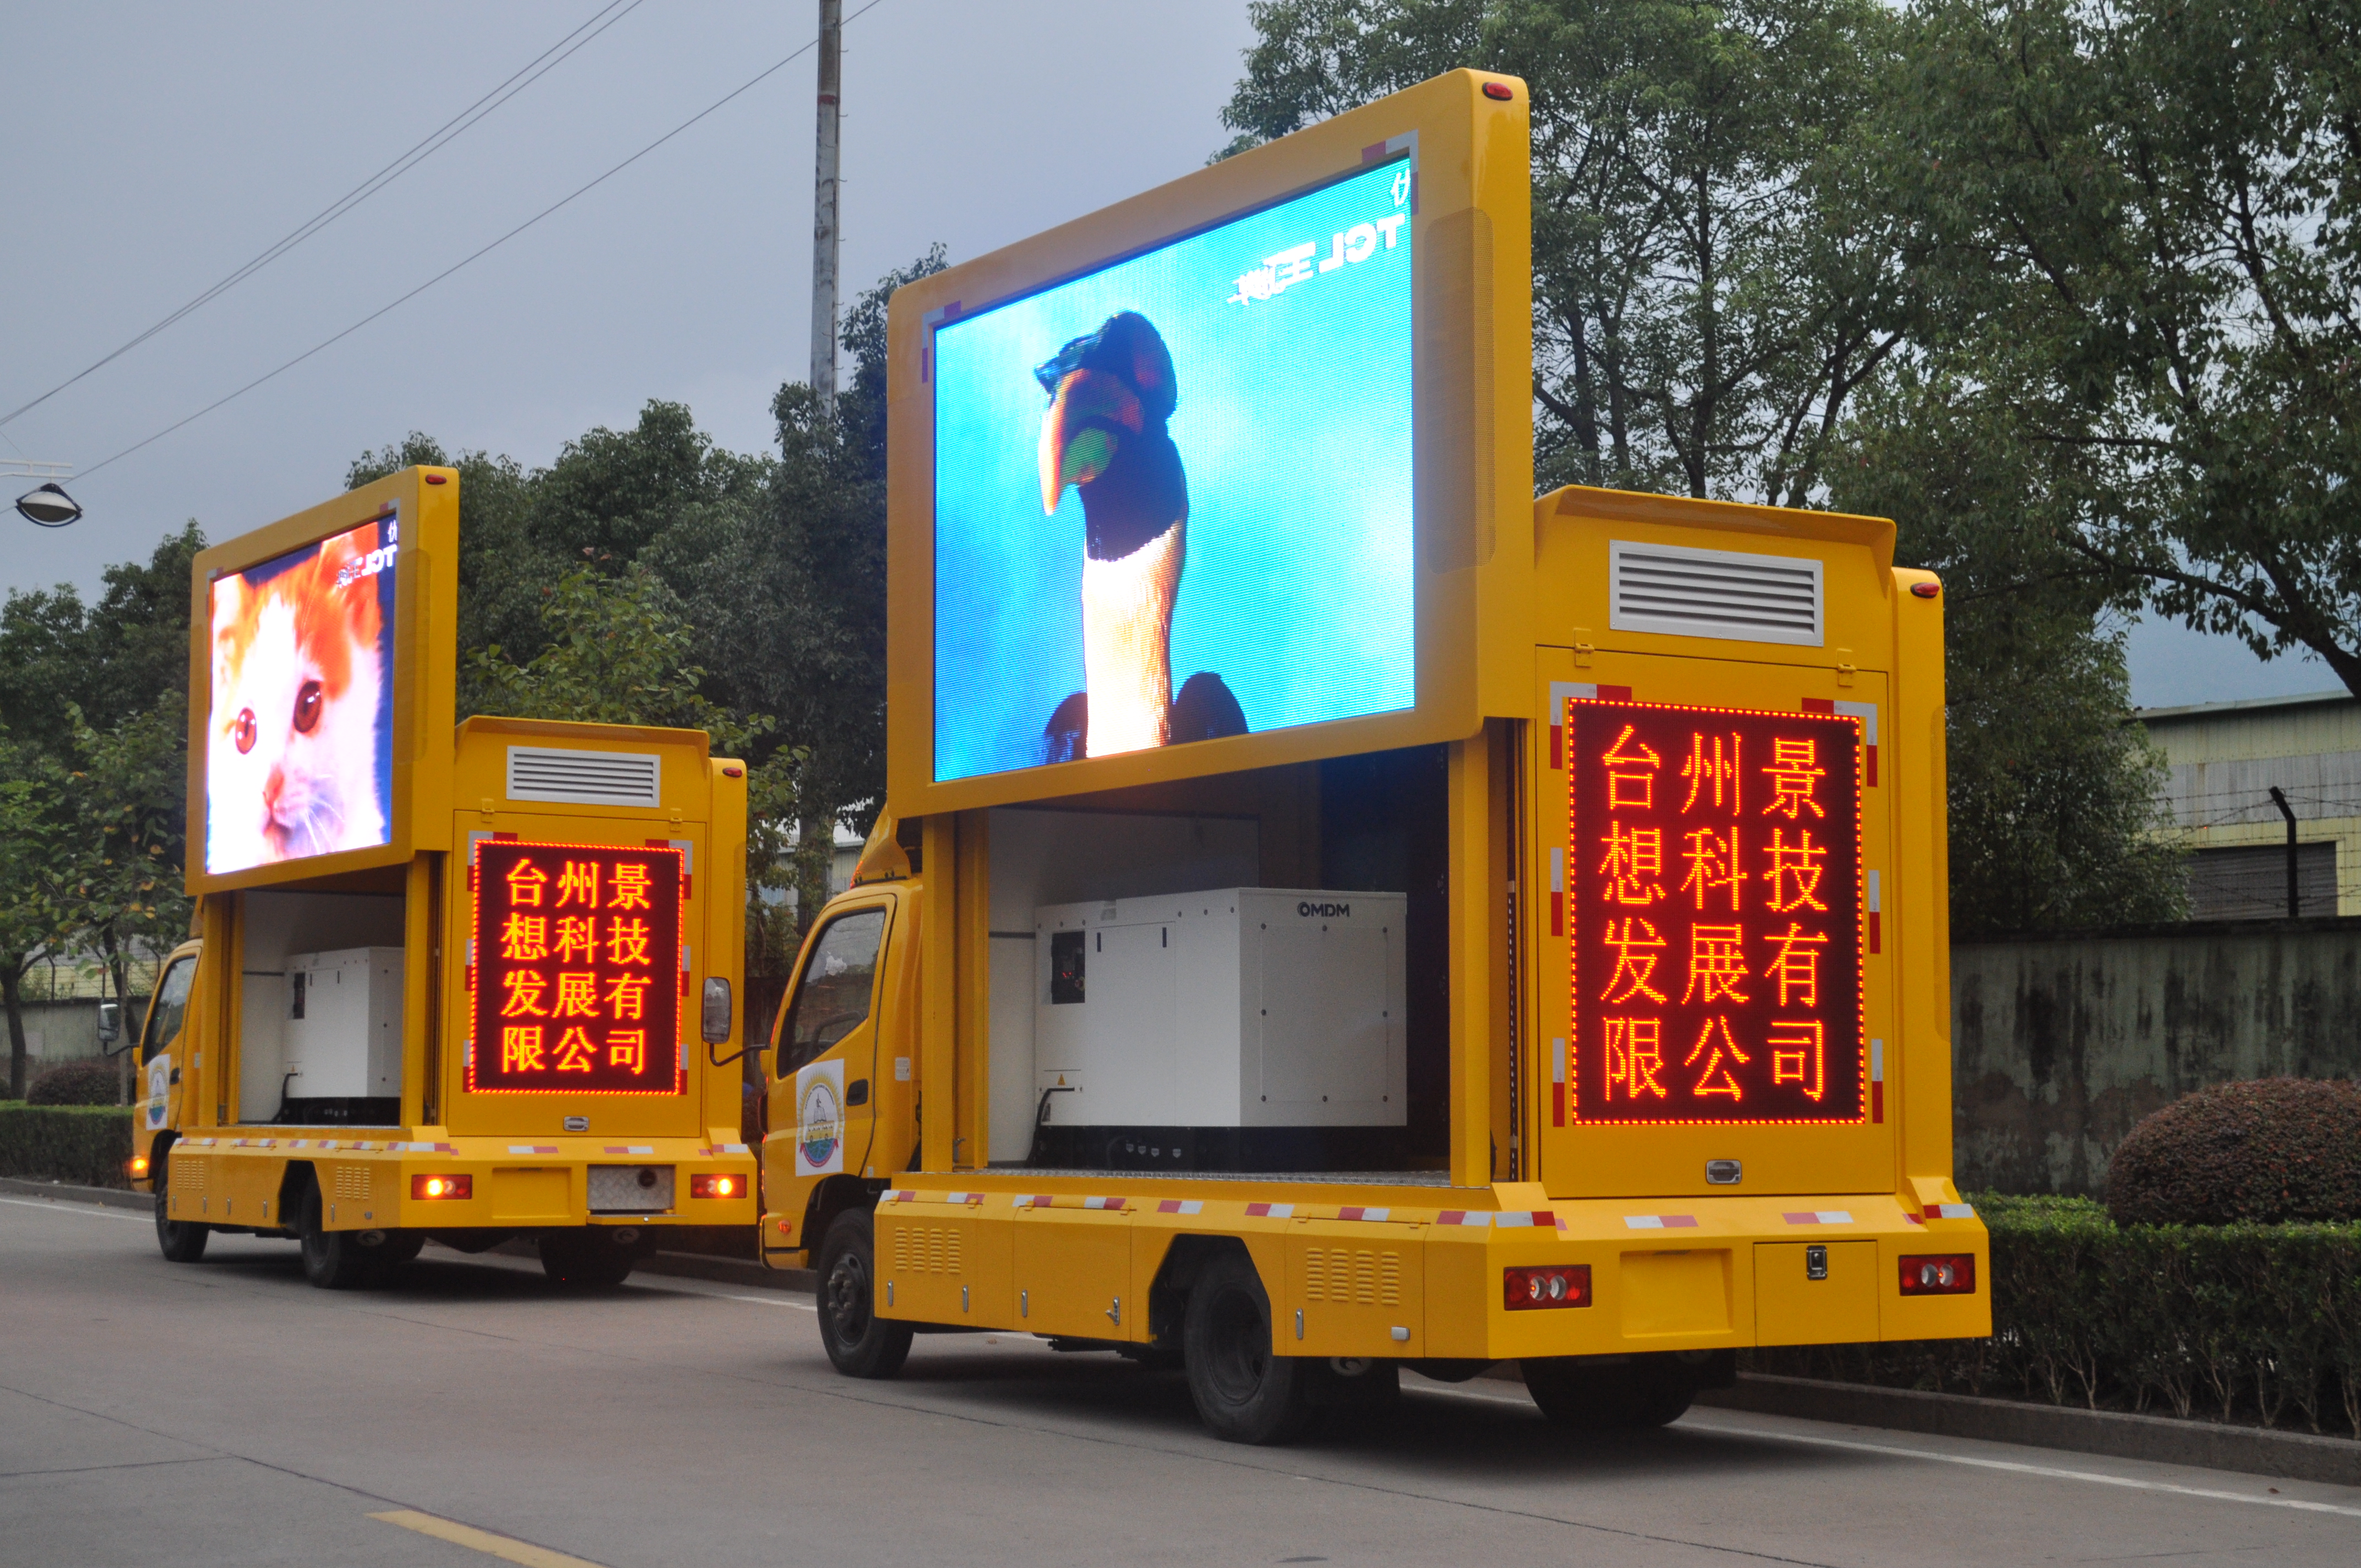 led display advertising outdoor trucks